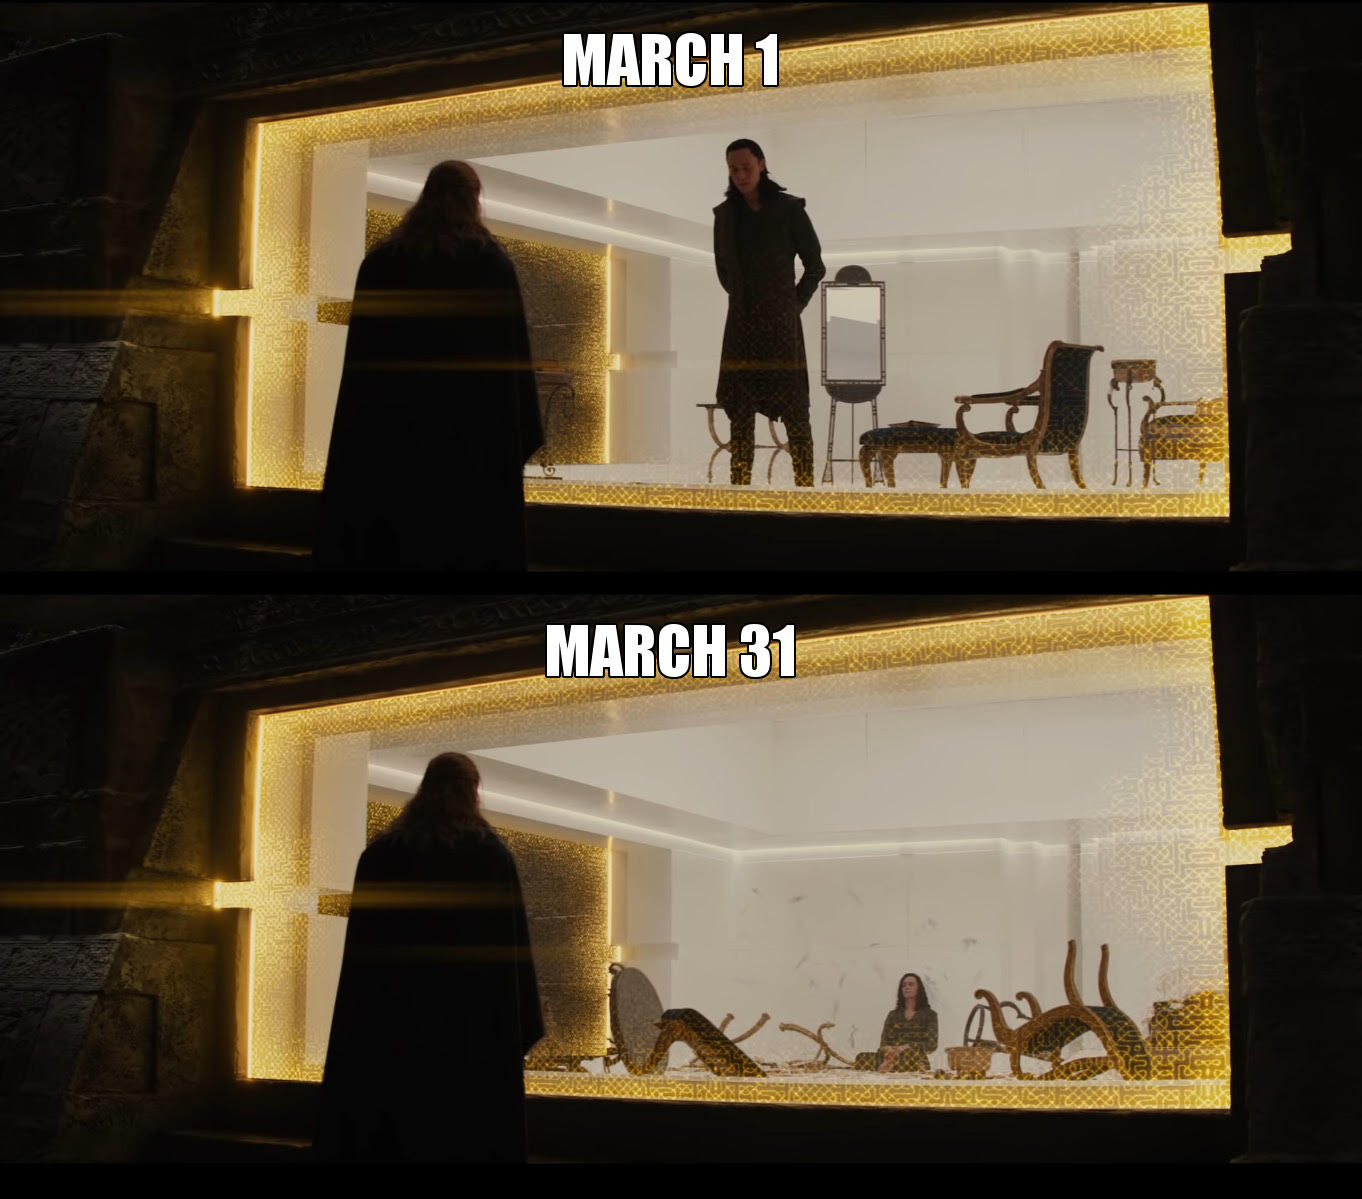 March 1 vs. March 31